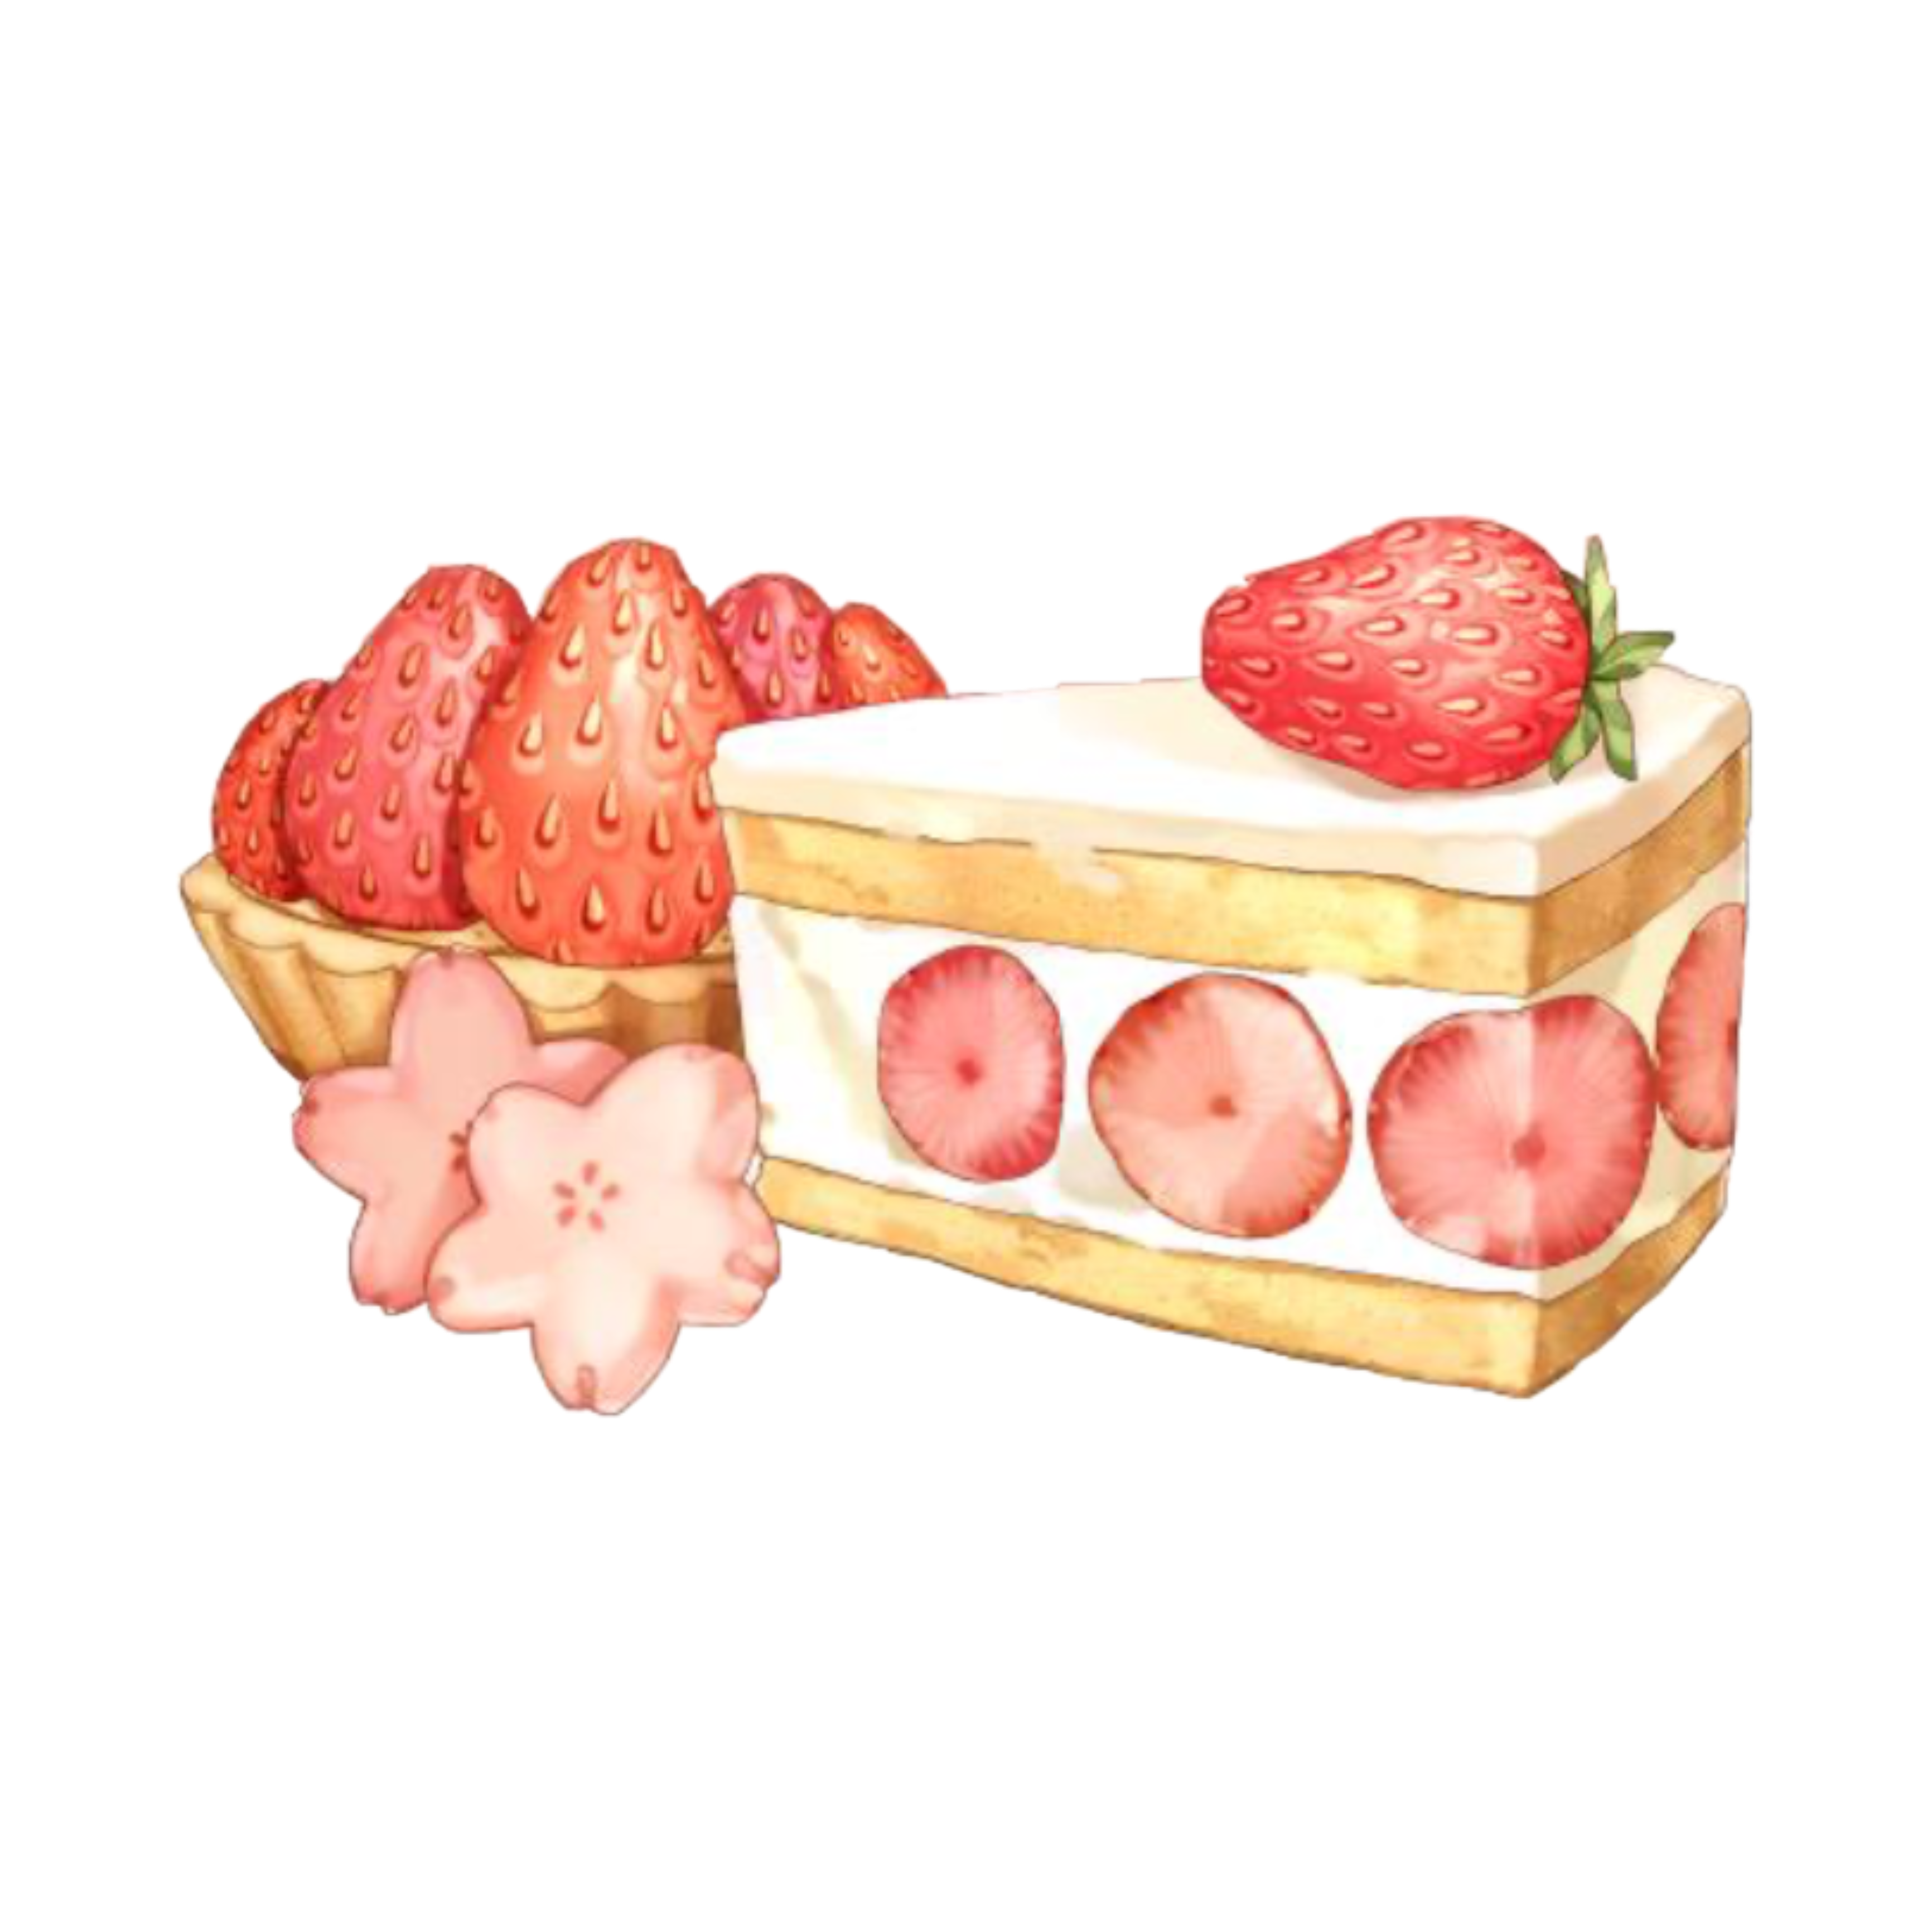 Strawberry cake Cartoon stock illustration. Illustration of copy - 215747515